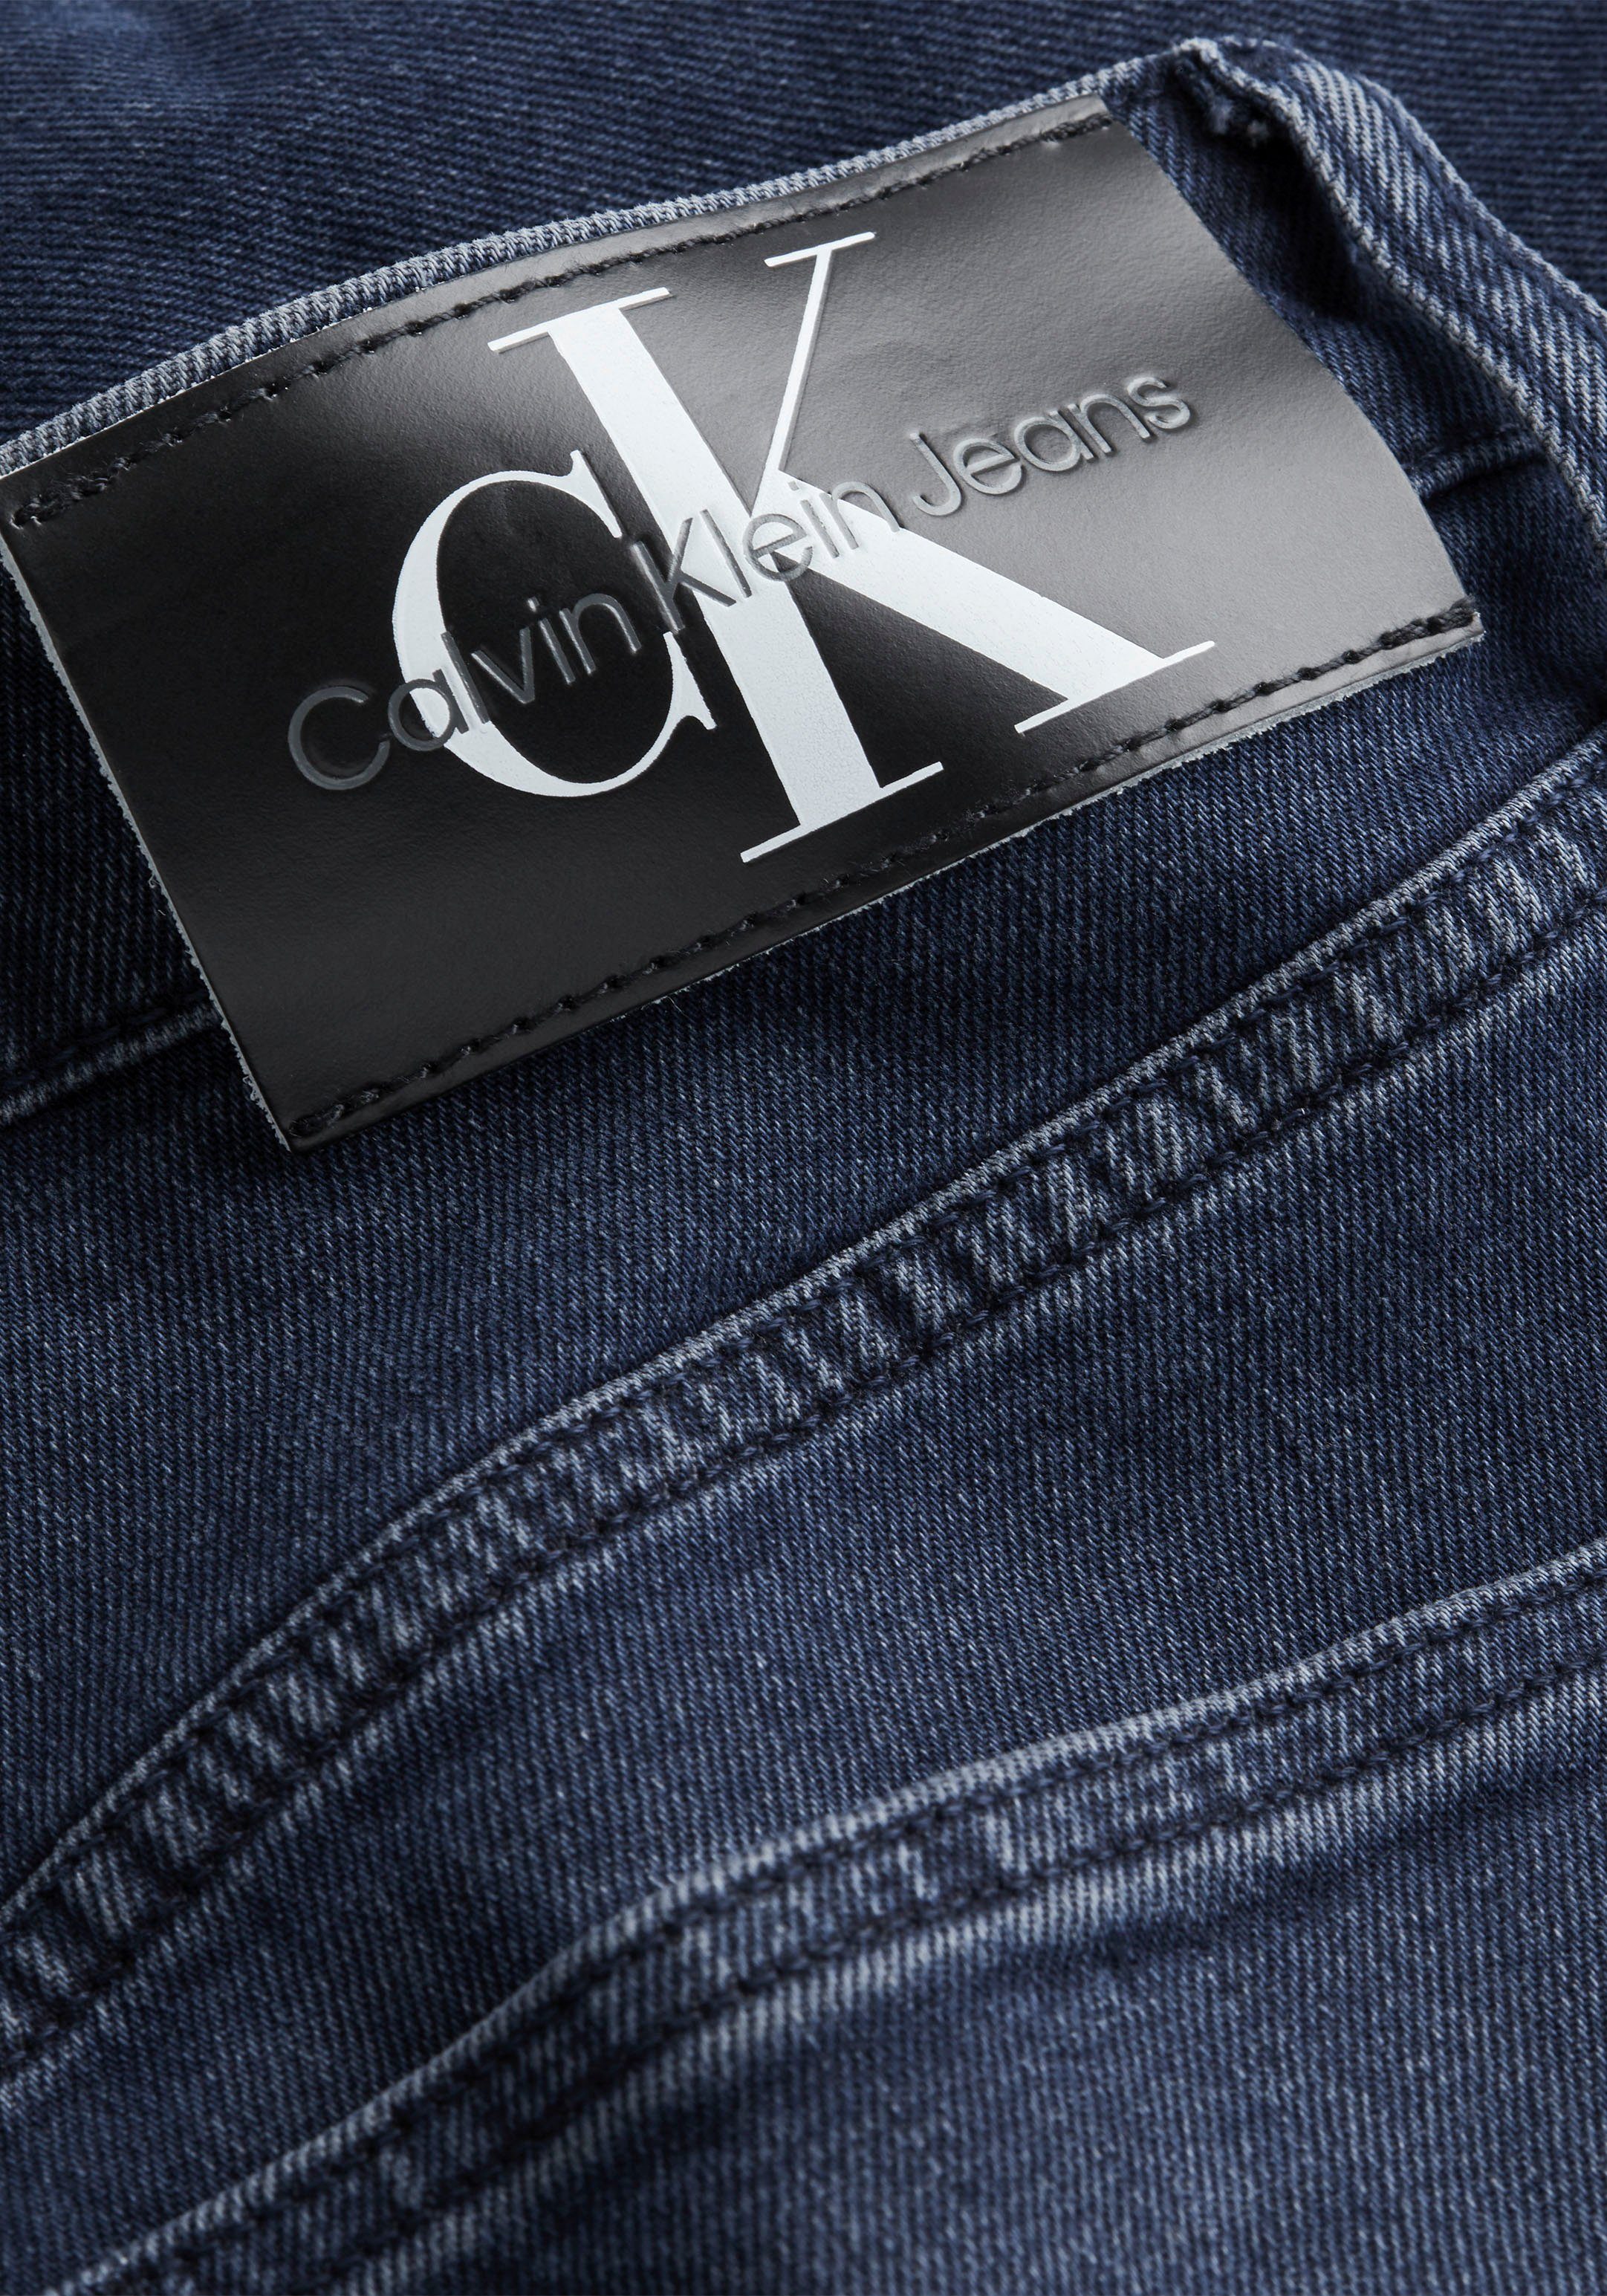 Klein Tapered-fit-Jeans Calvin darkblue Taper Slim Jeans